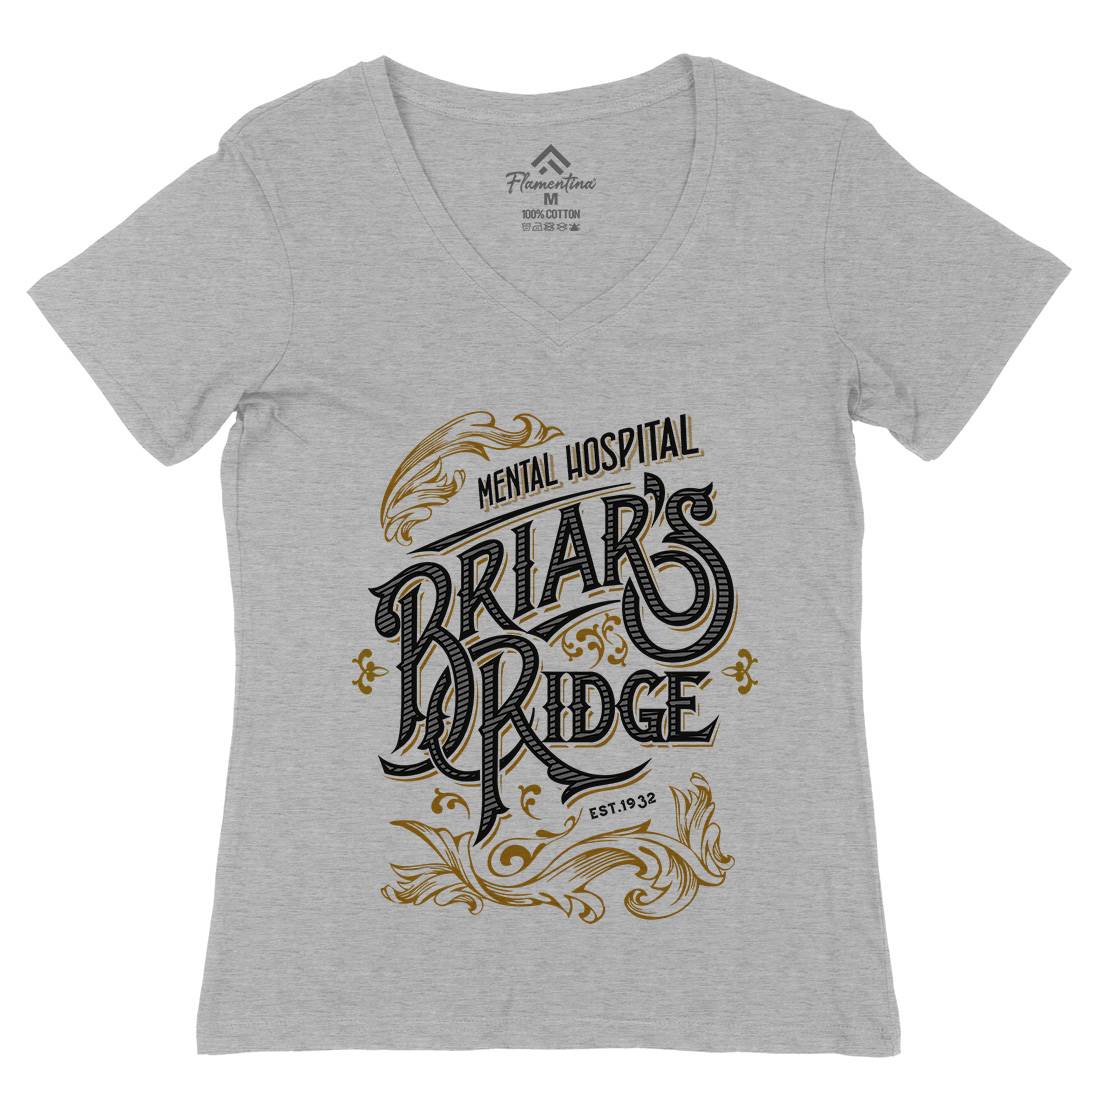 Briar Ridge Womens Organic V-Neck T-Shirt Retro D367